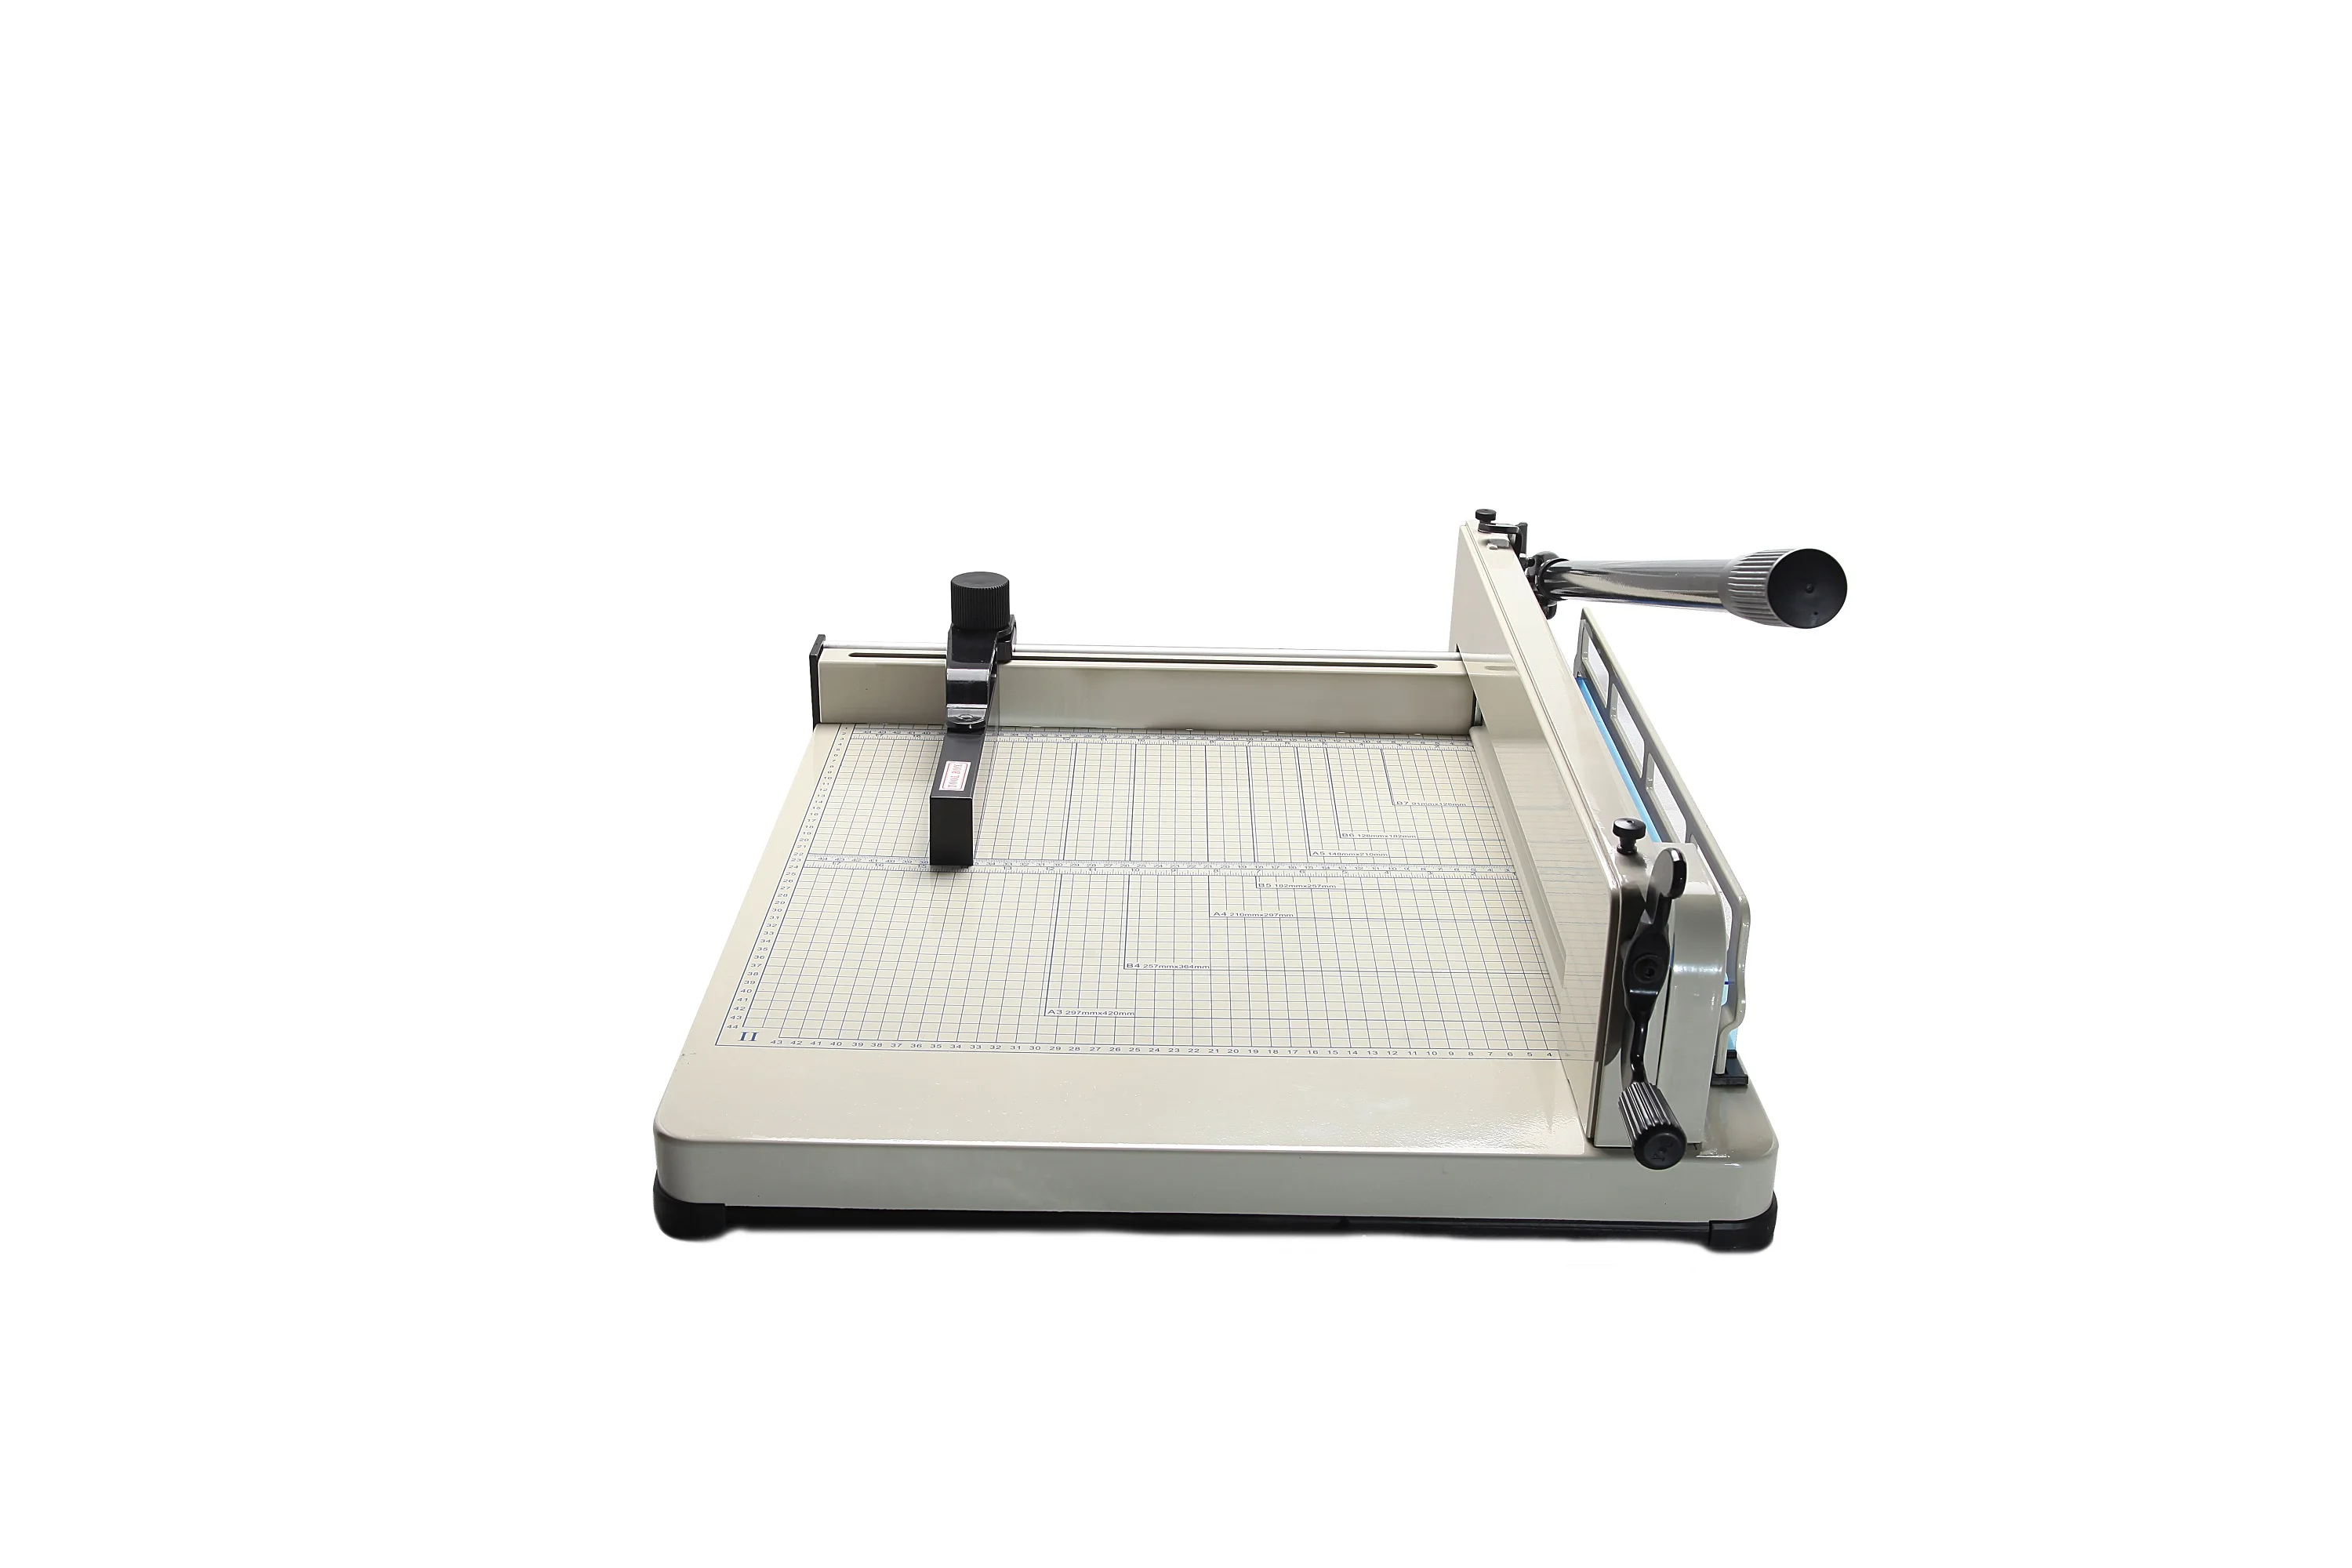 Factory direct sales no minimum order quantity 858A4 heavy-duty manual paper cutter